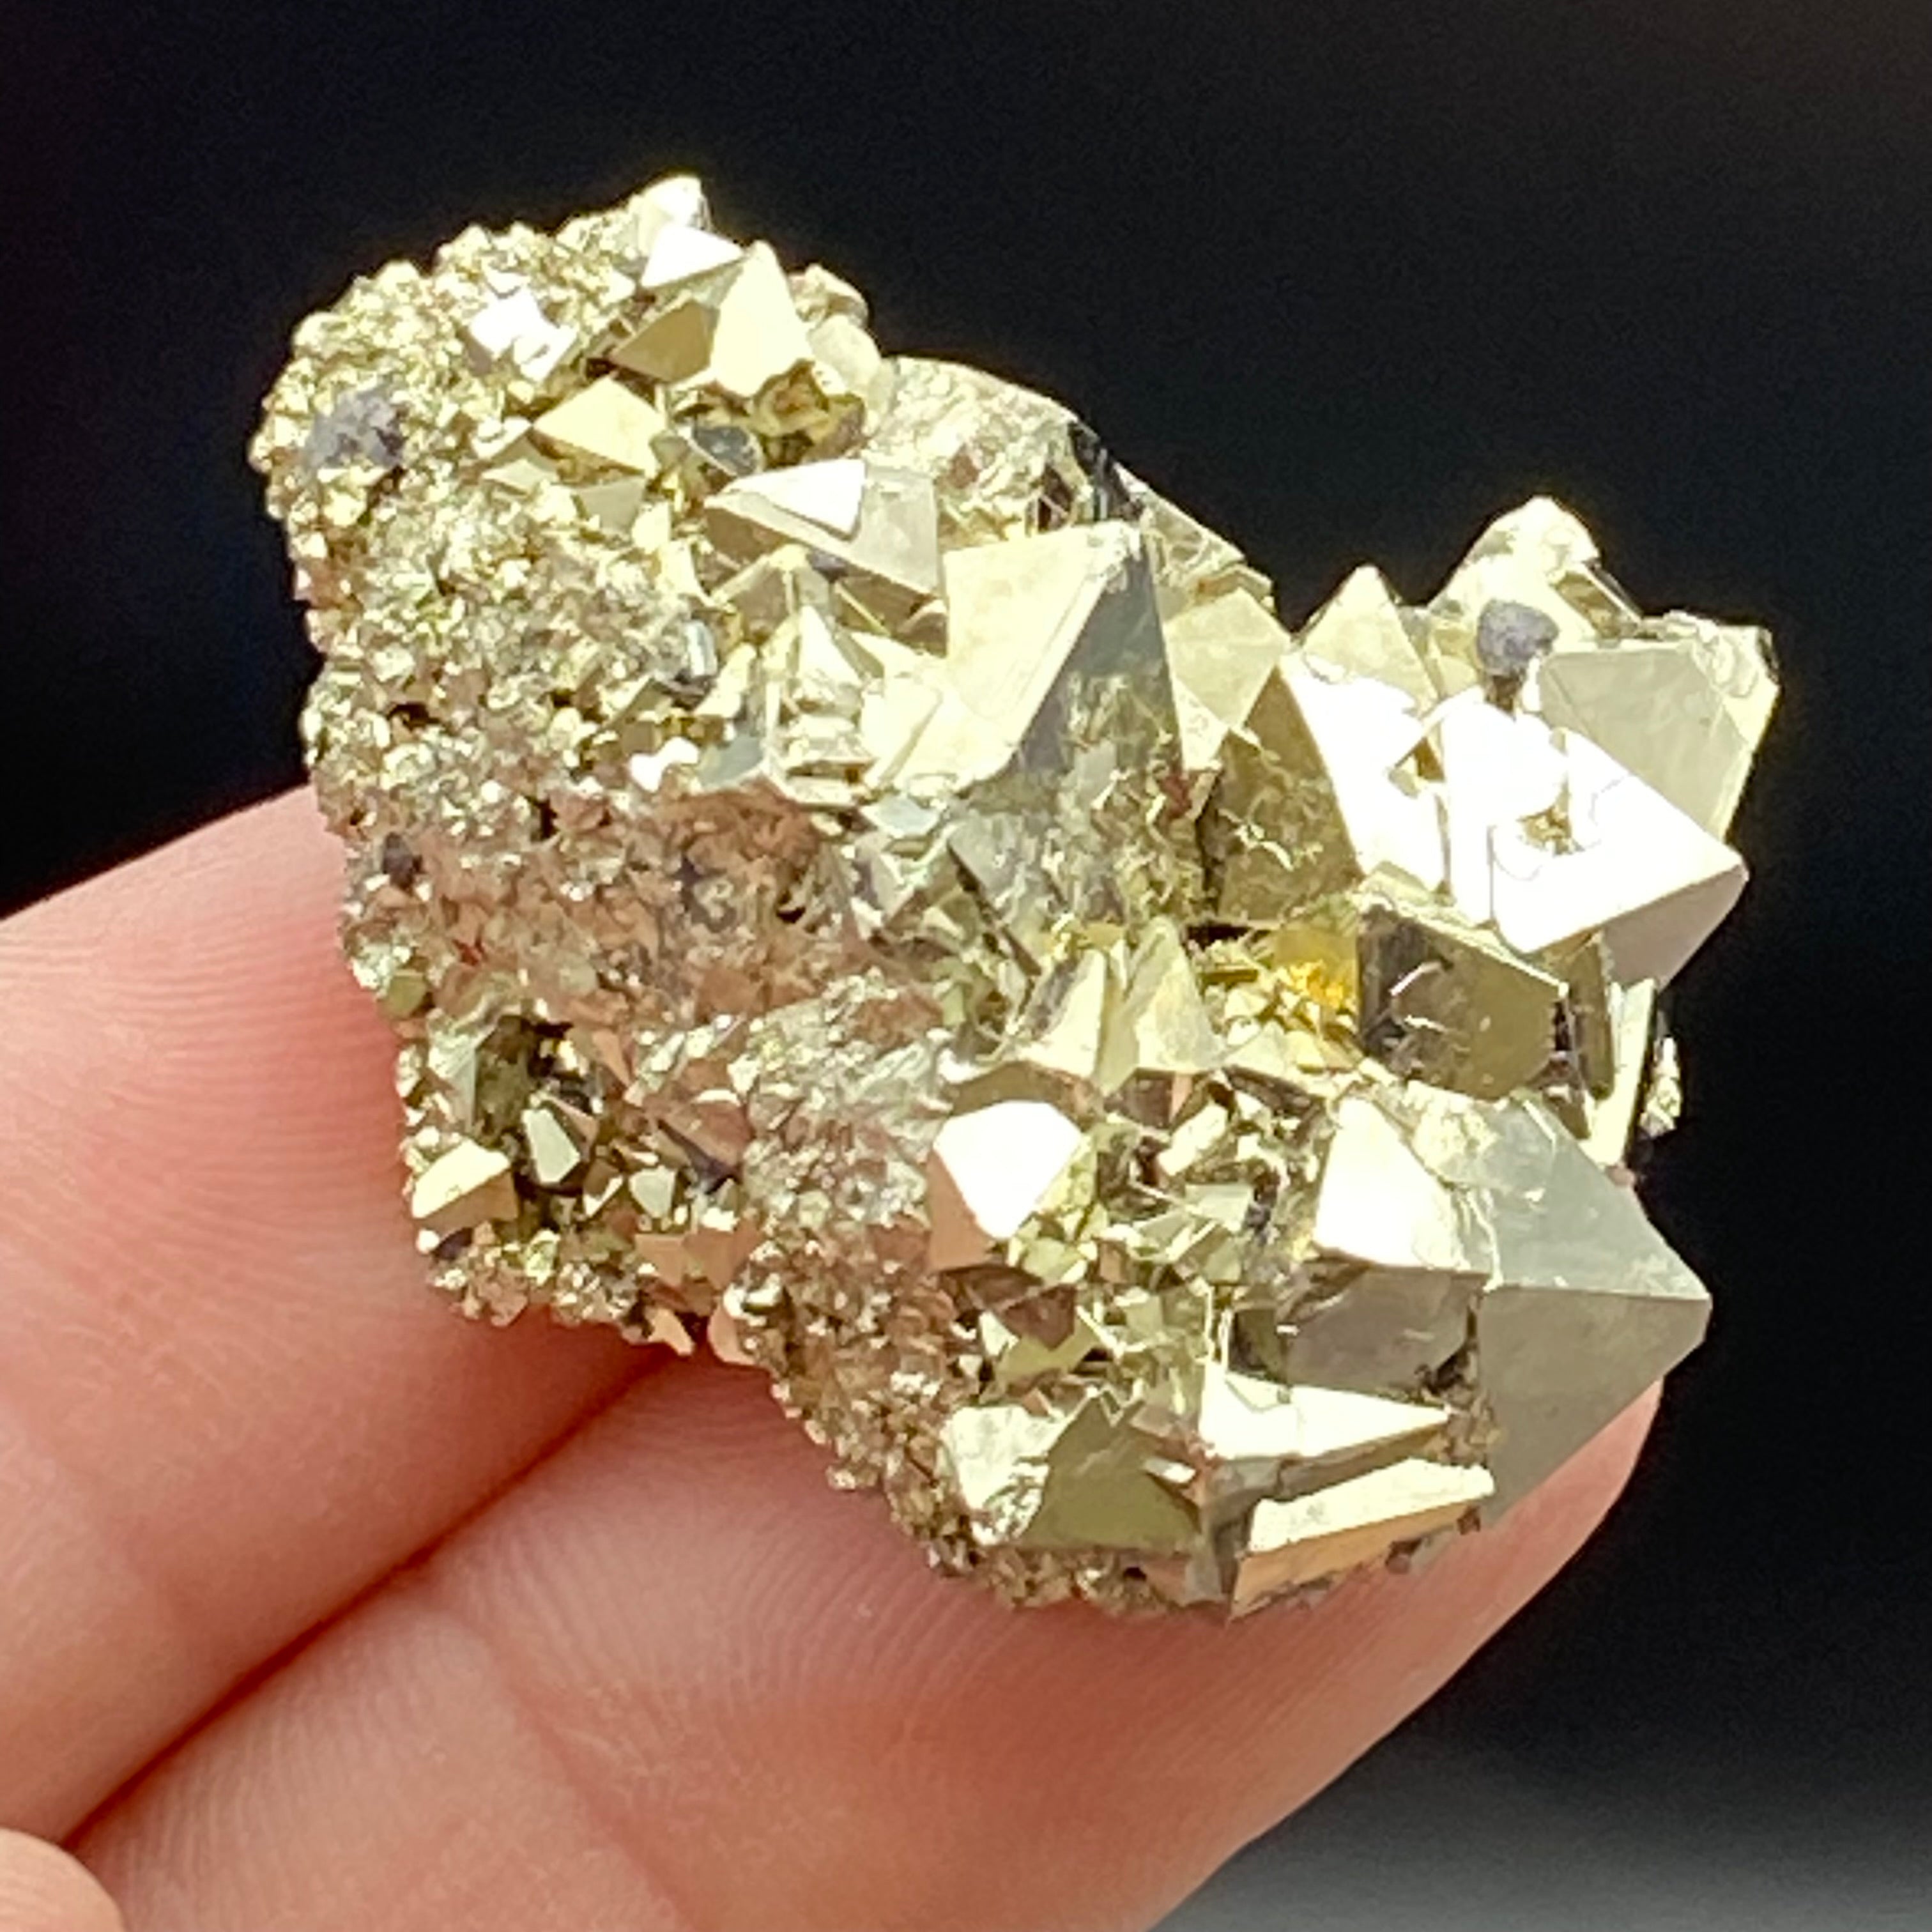 Peruvian Pyrite Crystal - 128